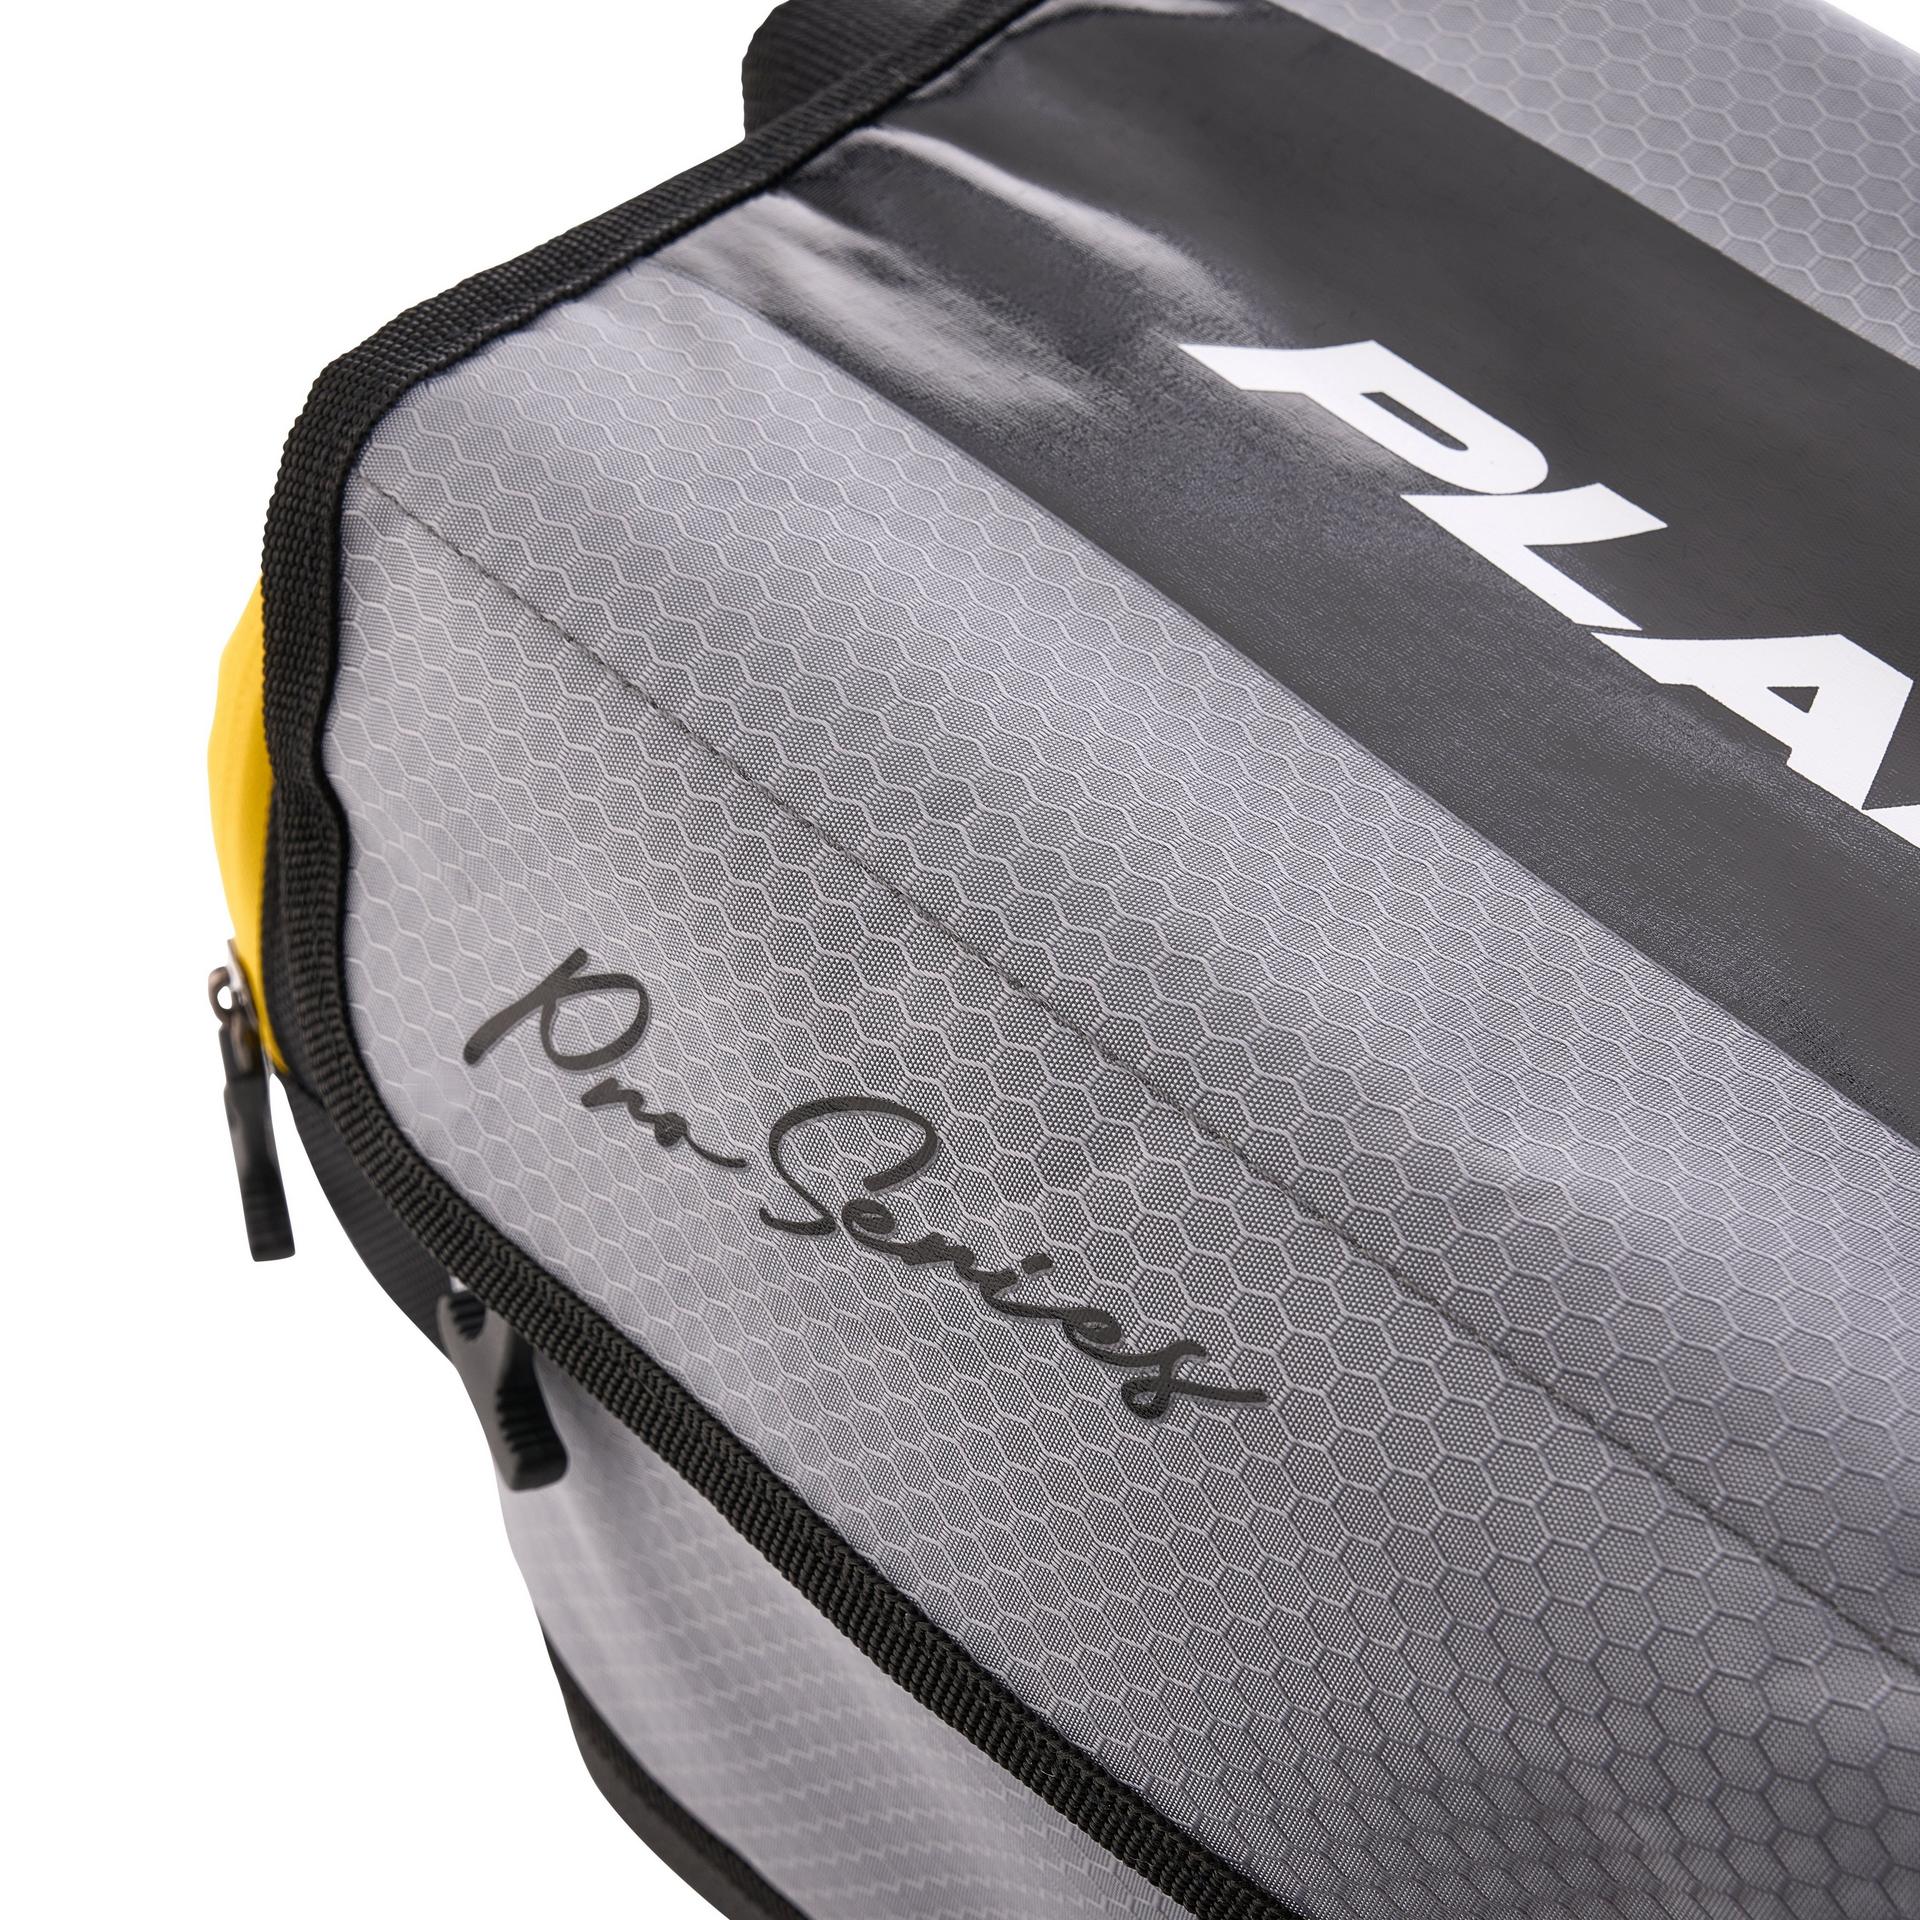 Pro Series Tackle Bag | Plano®